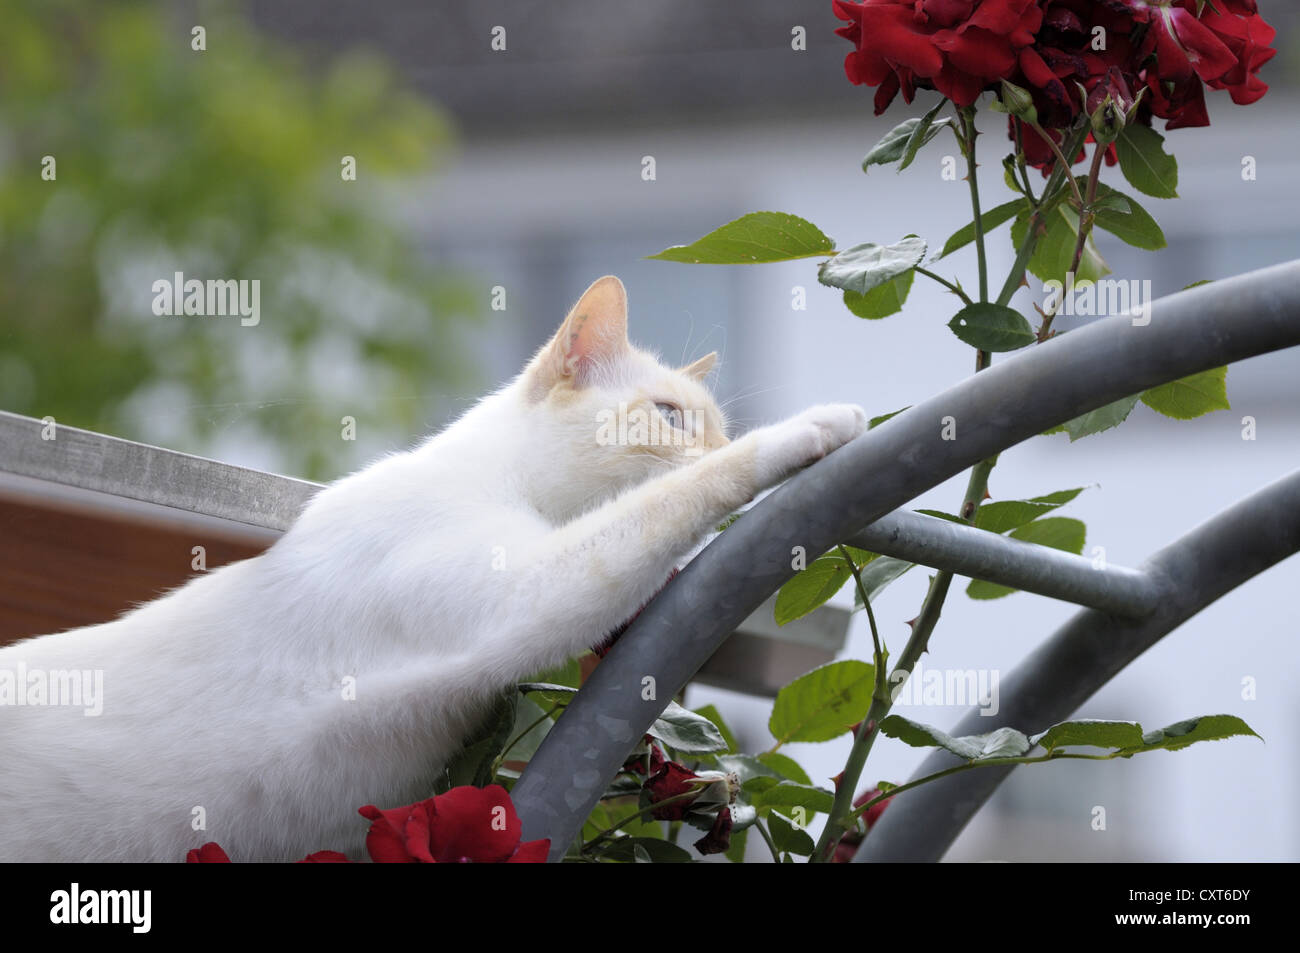 Thai cat climbing a rose arch Stock Photo